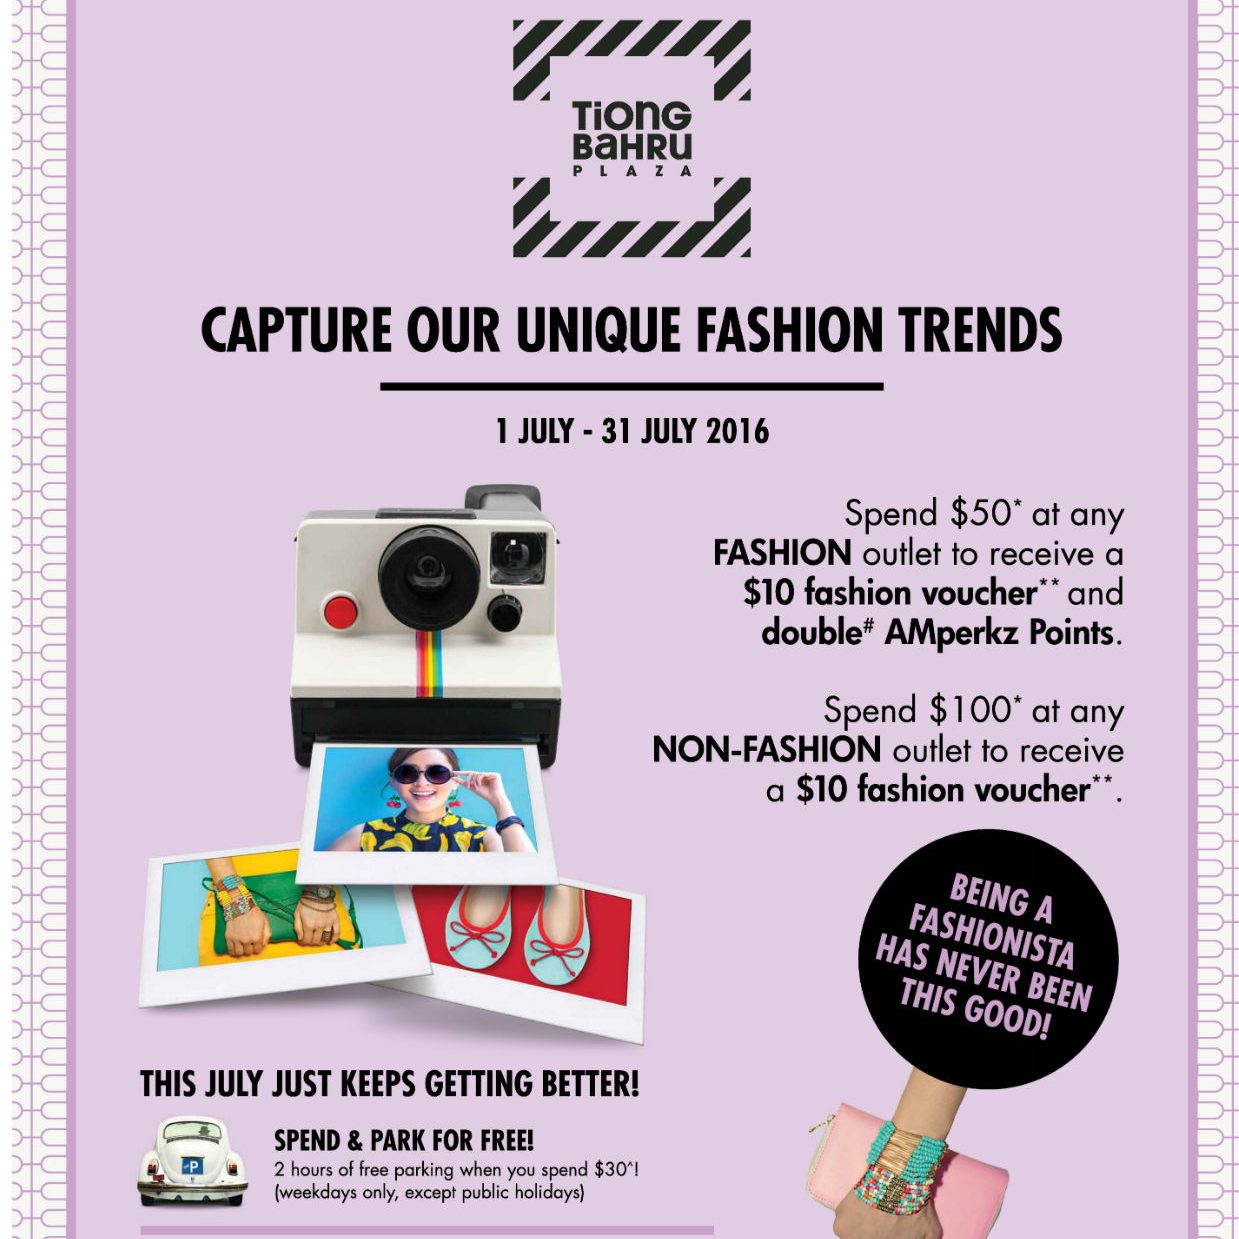 Tiong Bahru Plaza Fashion Trends Singapore Contest 1 to 31 Jul 2016